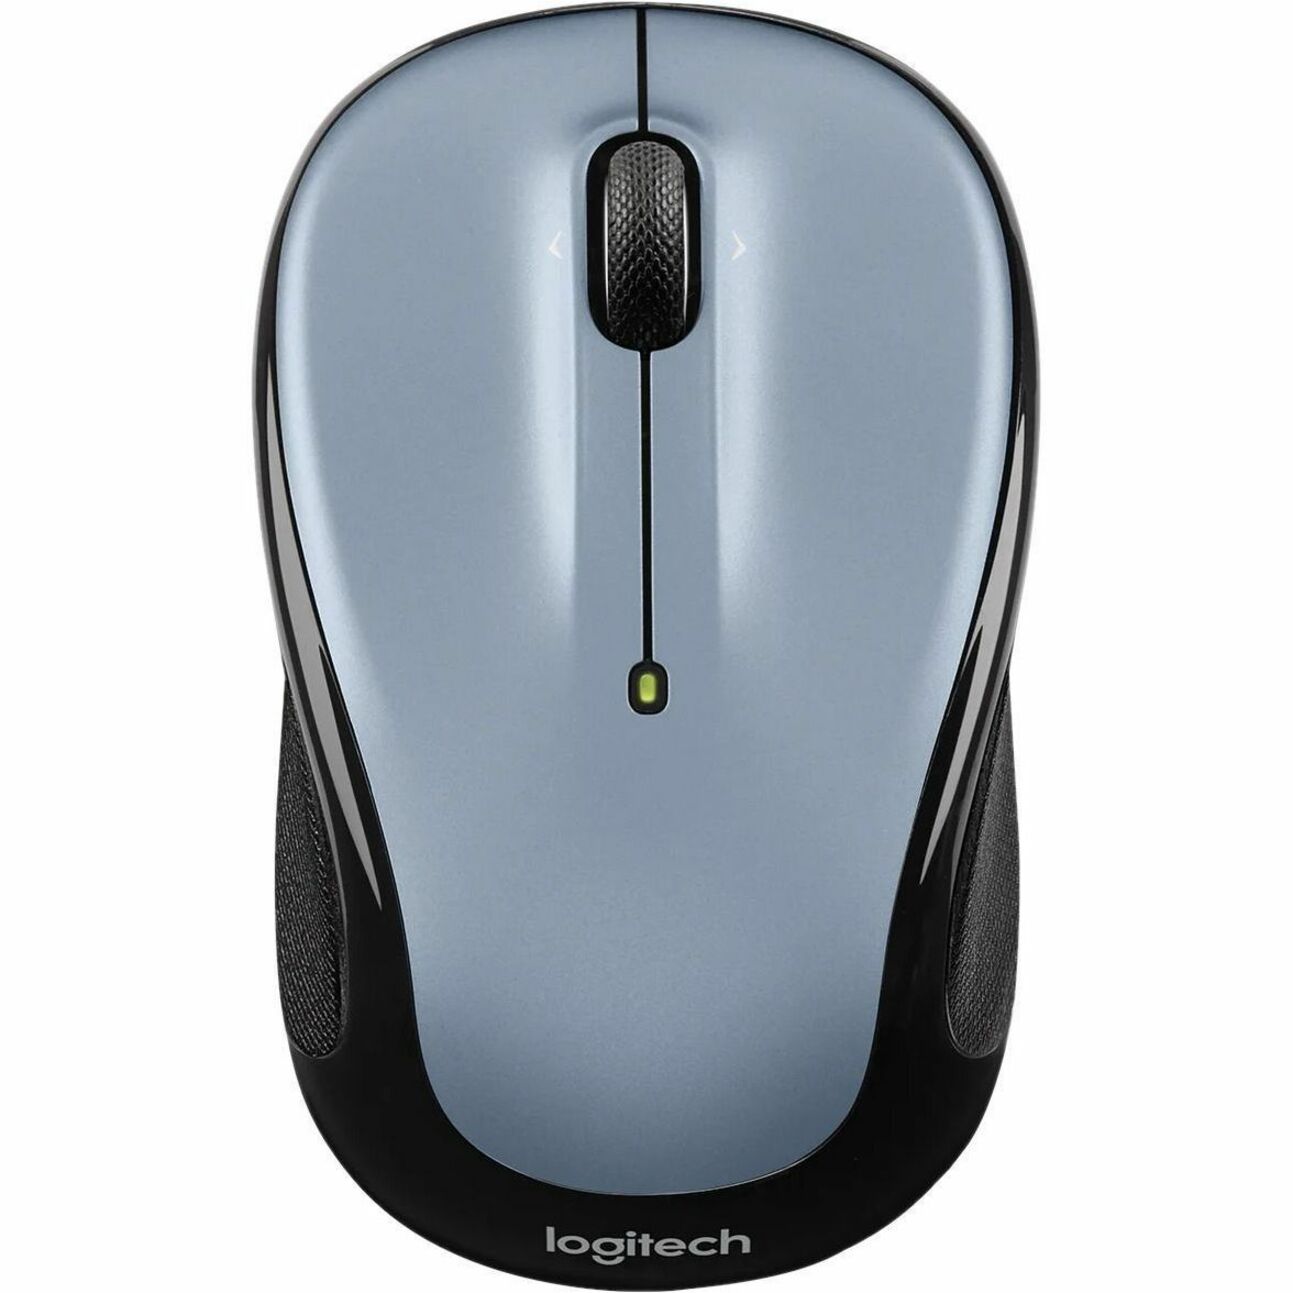 Logitech 910-006823 M325s Wireless Mouse, Small Size, 1000 dpi, Dark Silver